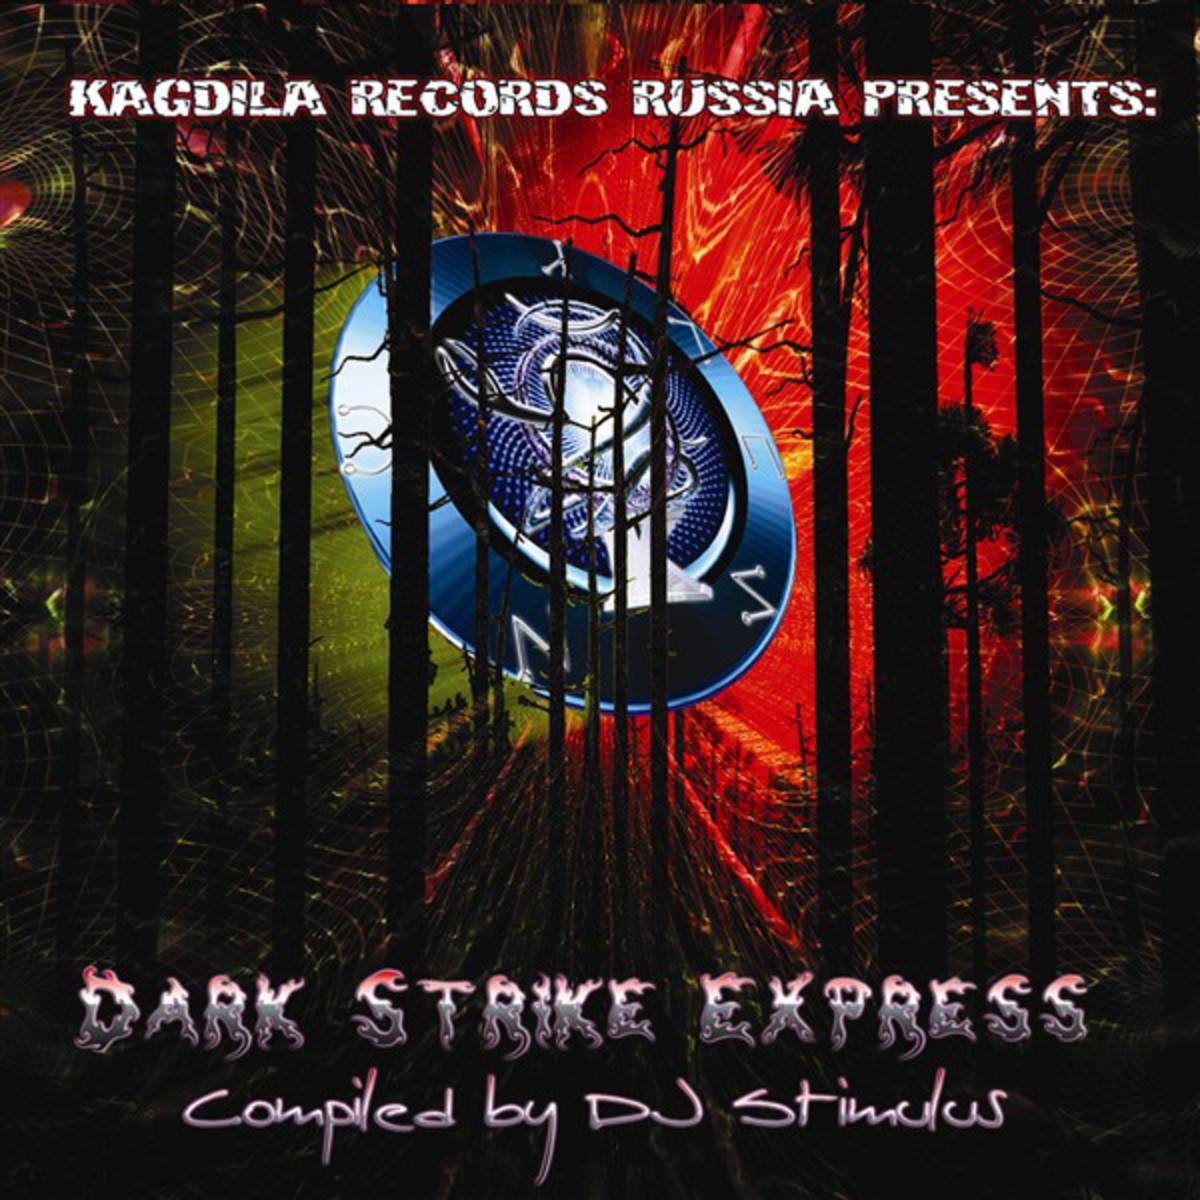 Dark Strike Express